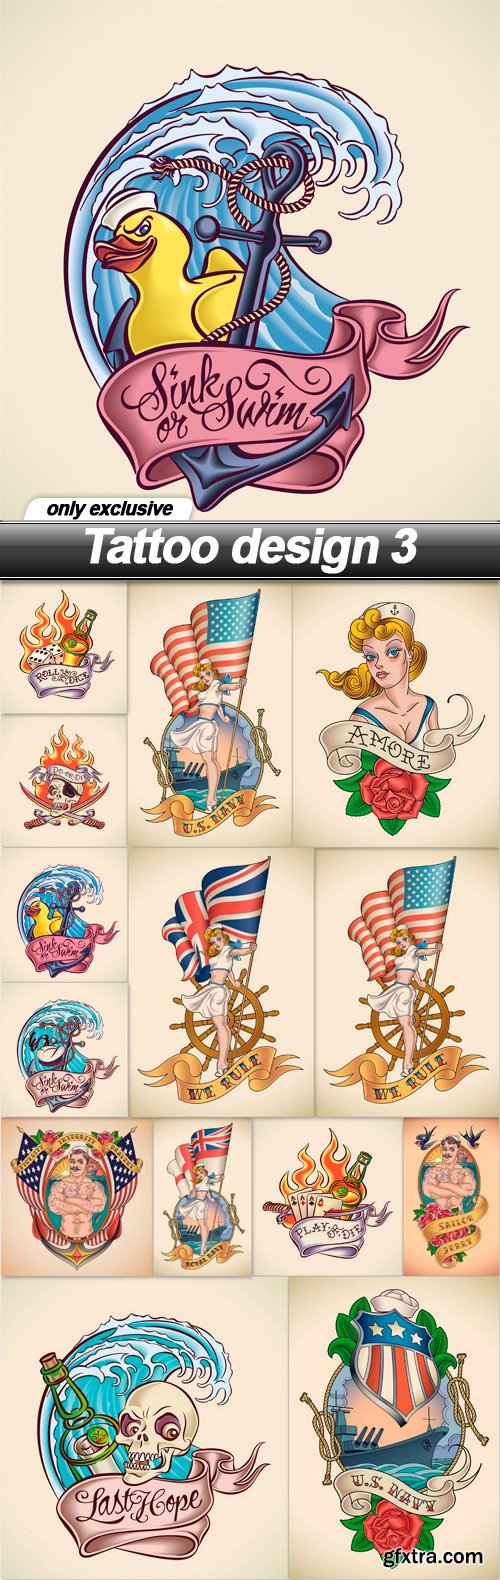 Tattoo design 3 - 14 EPS